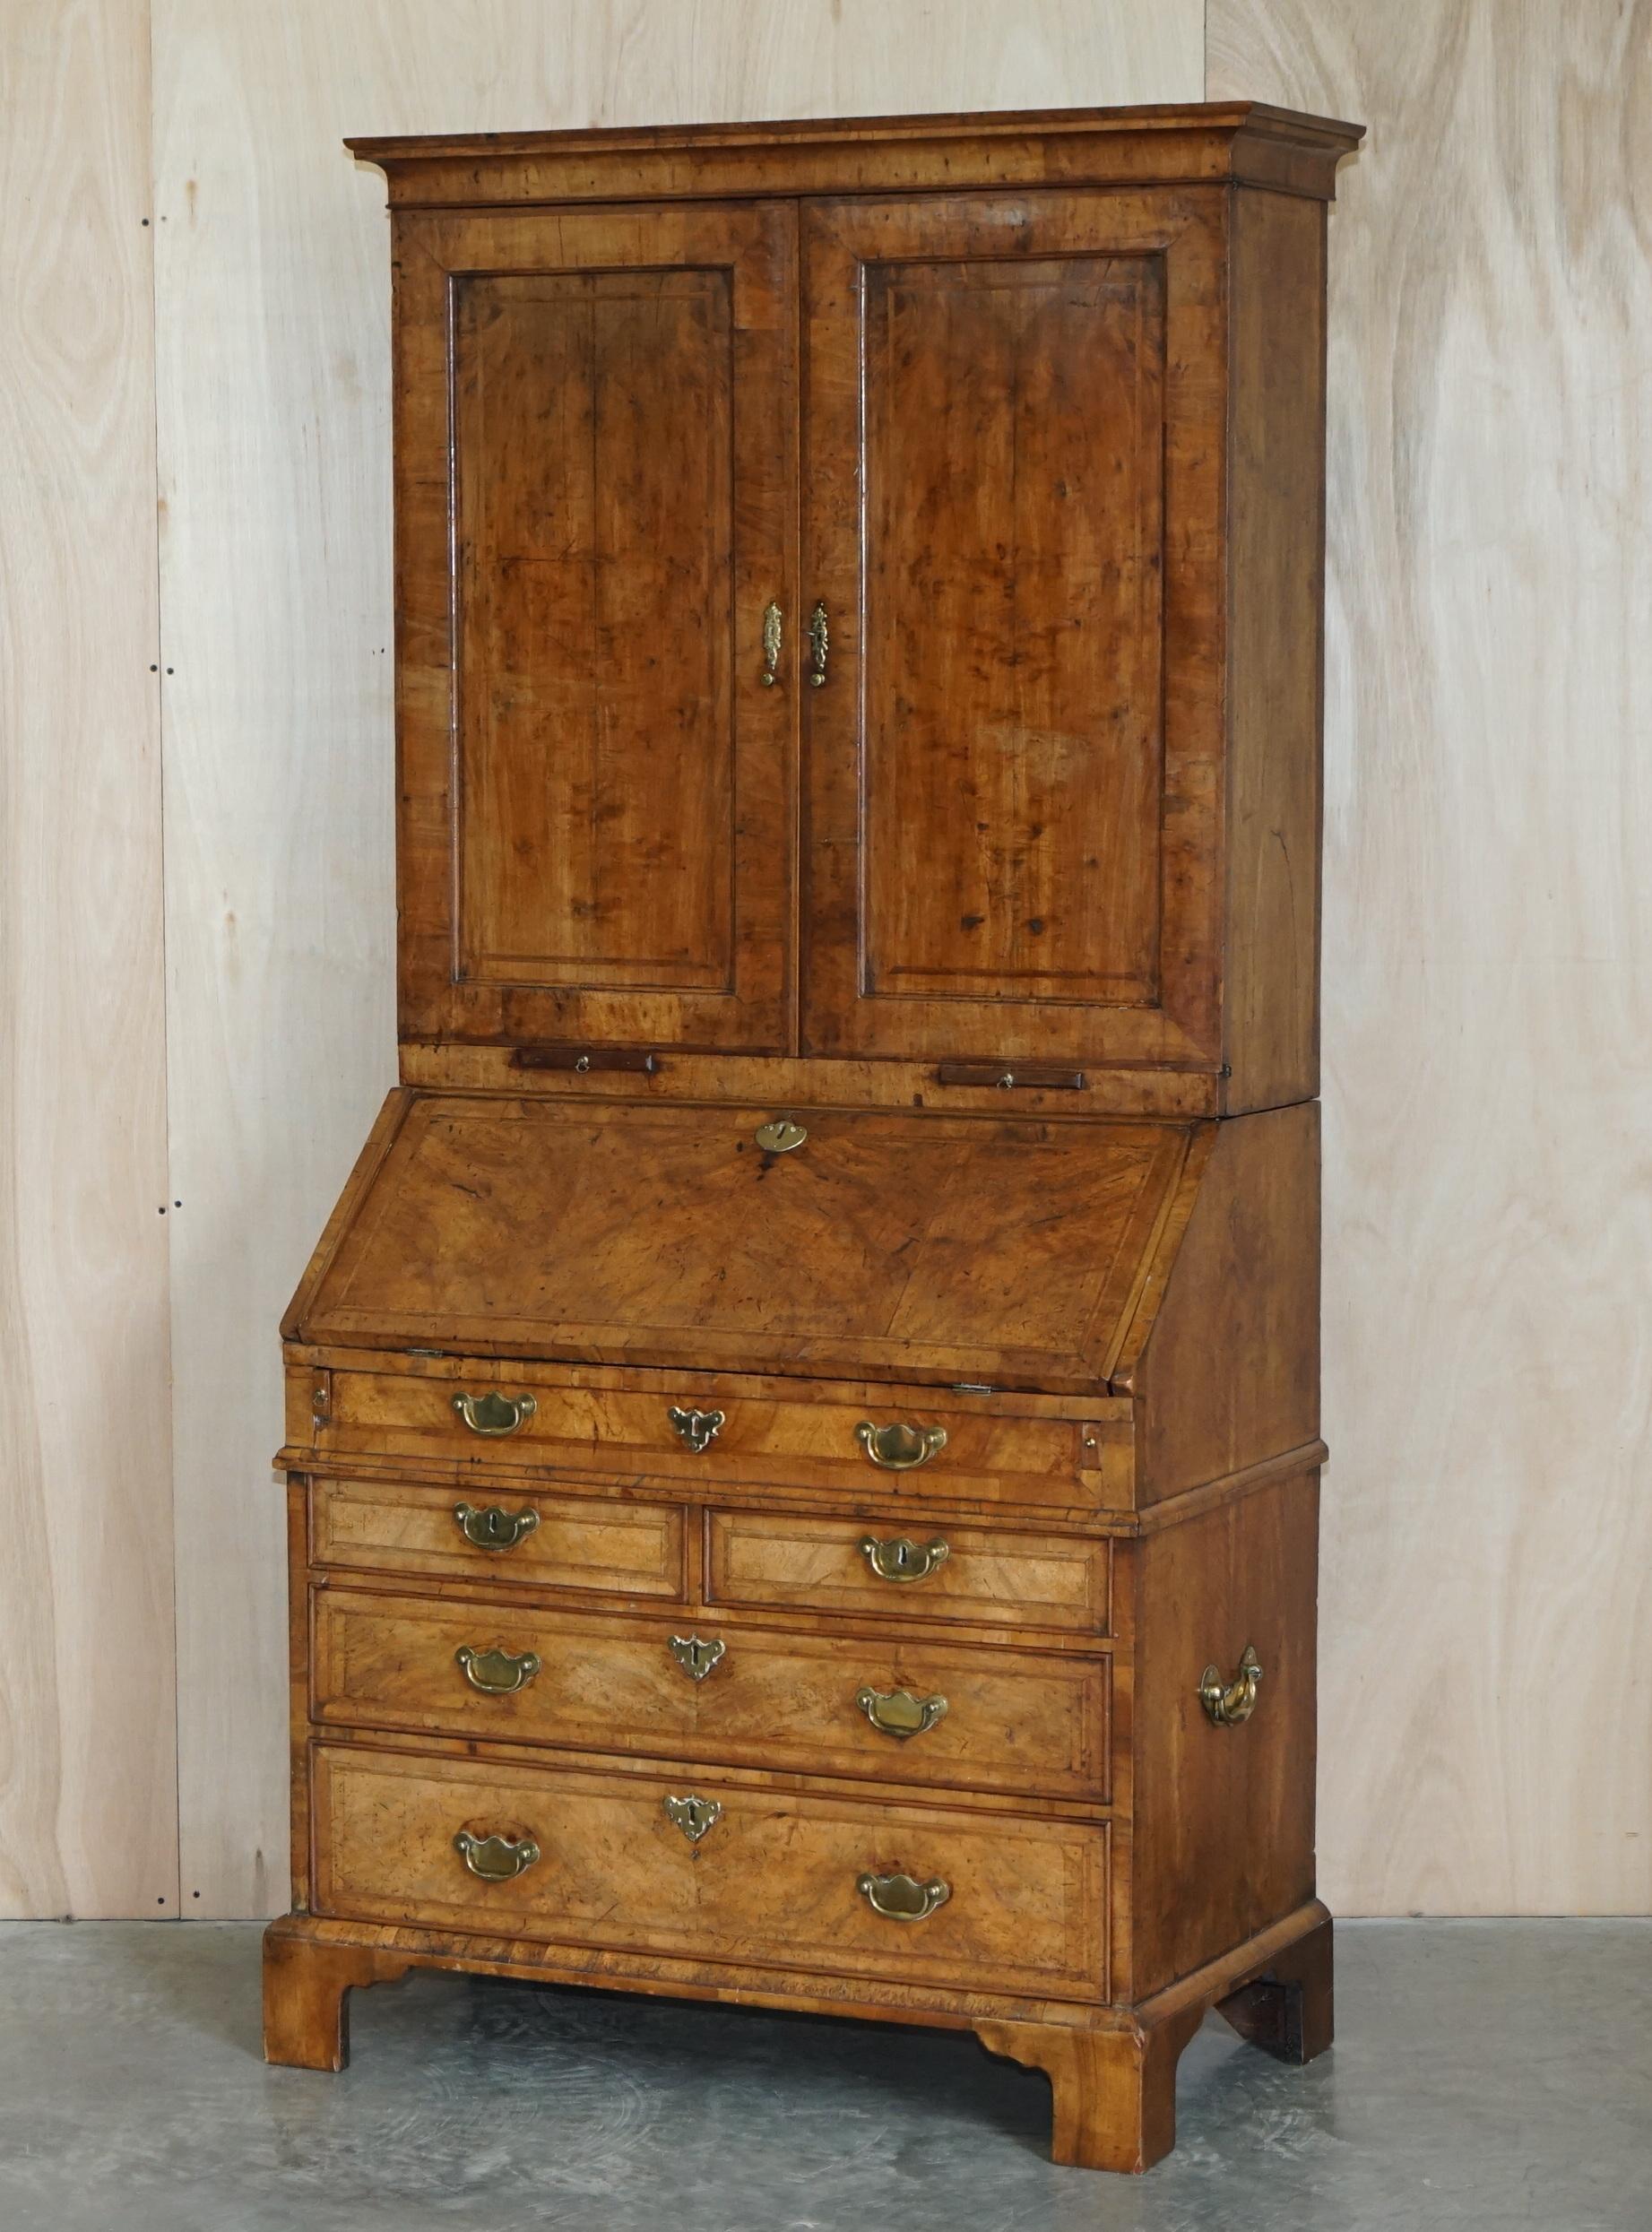 Fine Antique George II Circa 1740 Burr Walnut Burear Bookcase Chest of Drawers For Sale 1